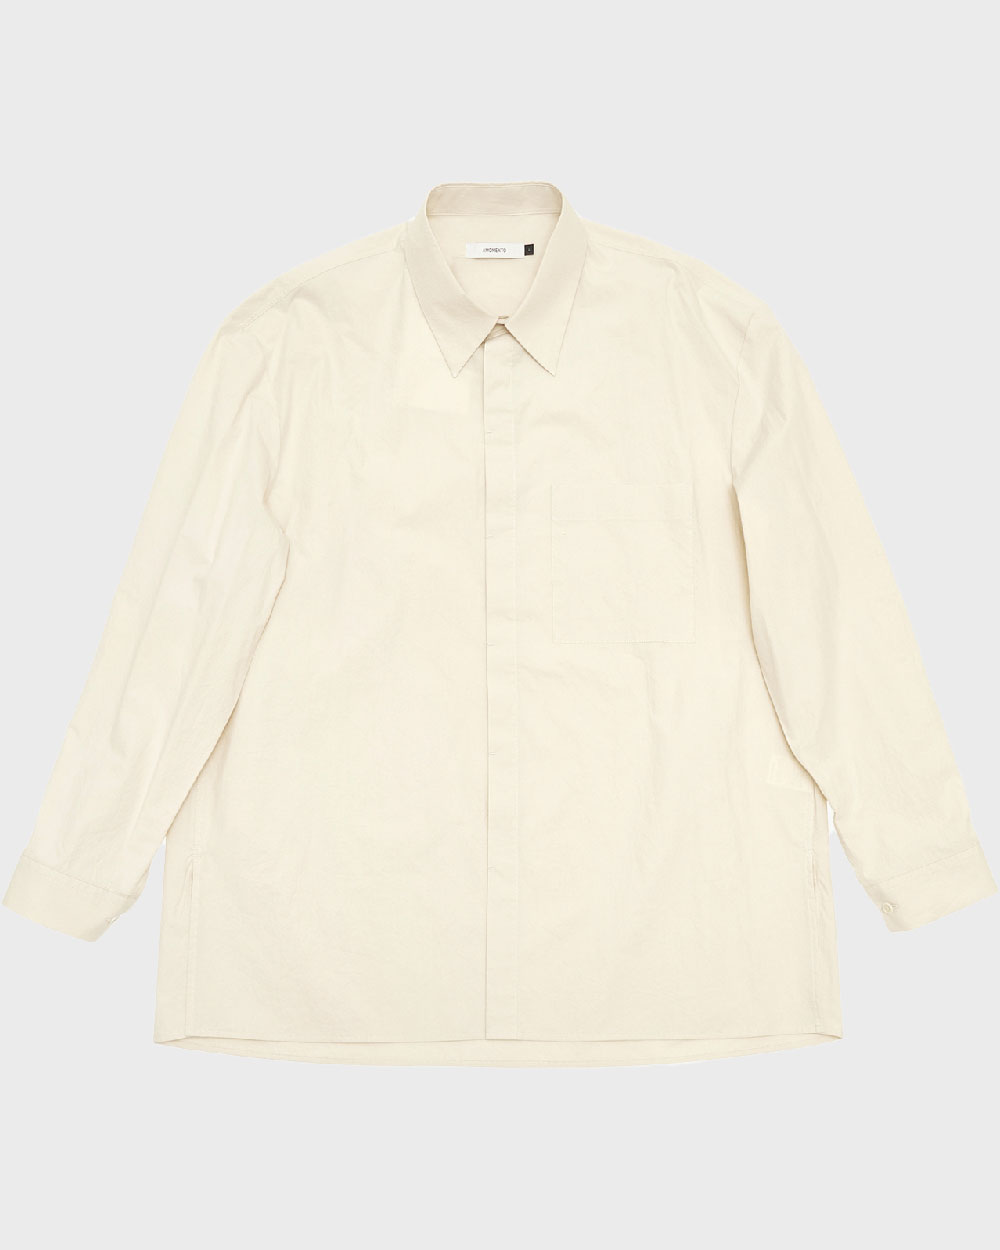 Square Pocket Oversized Shirts (Light Beige)